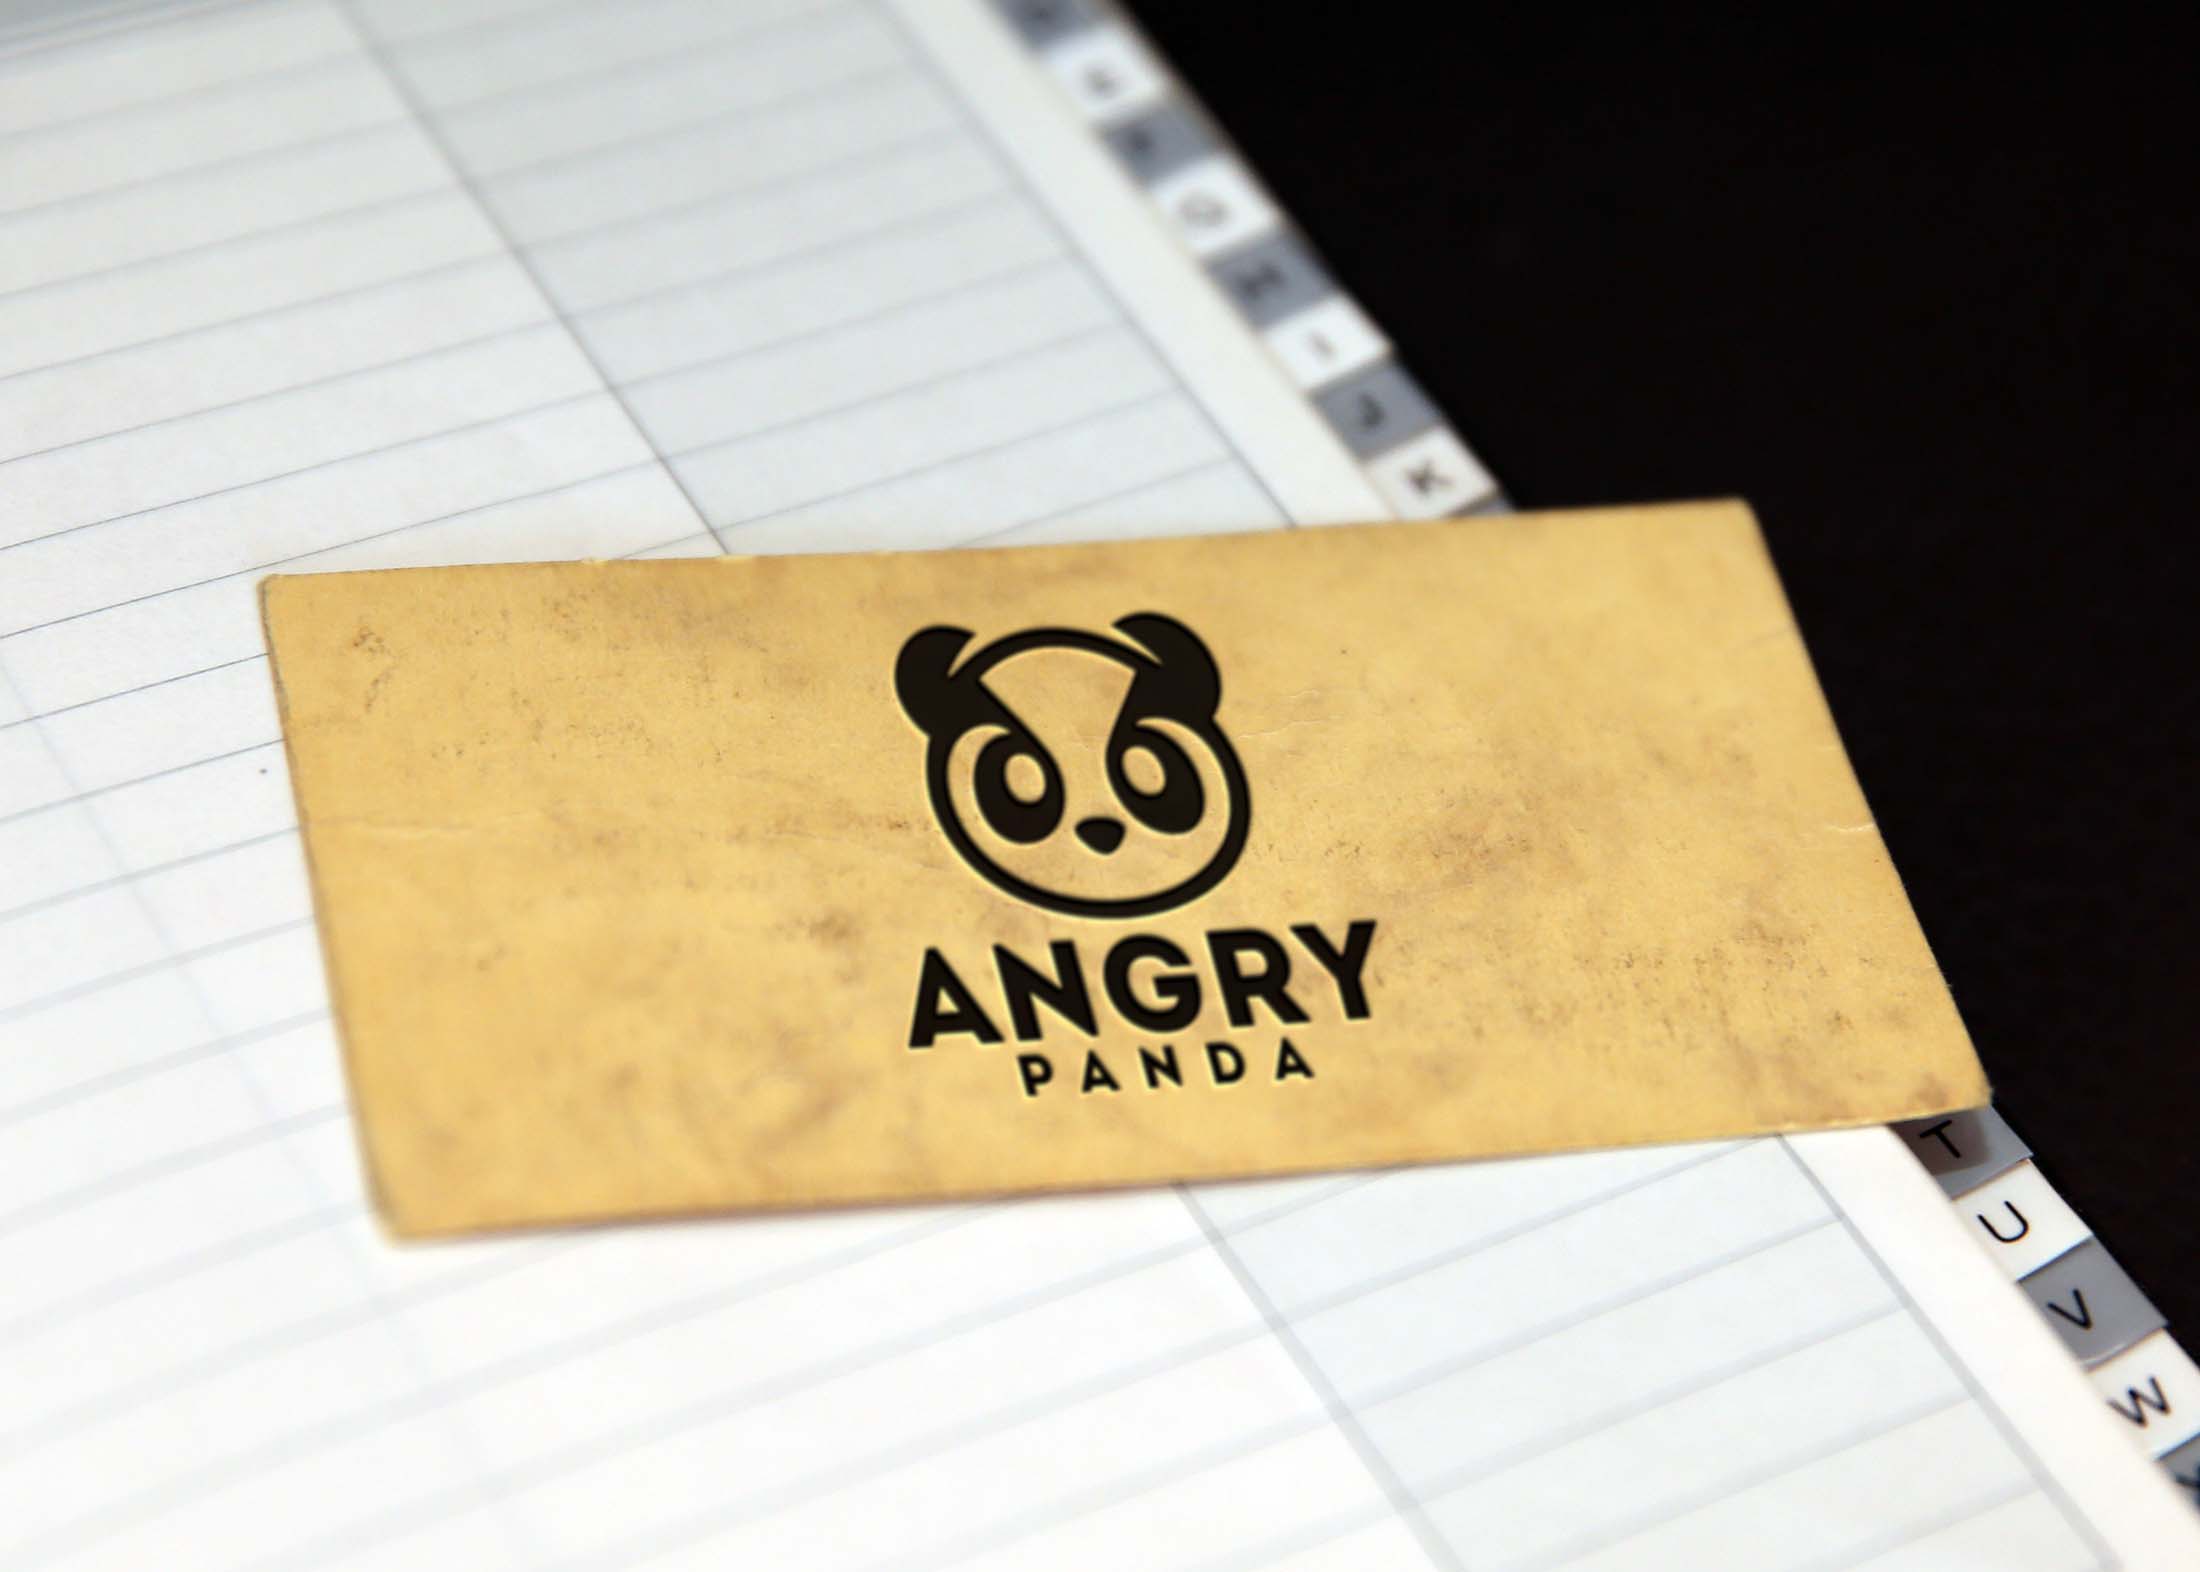 Angry panda Logo Mockup PSD 6